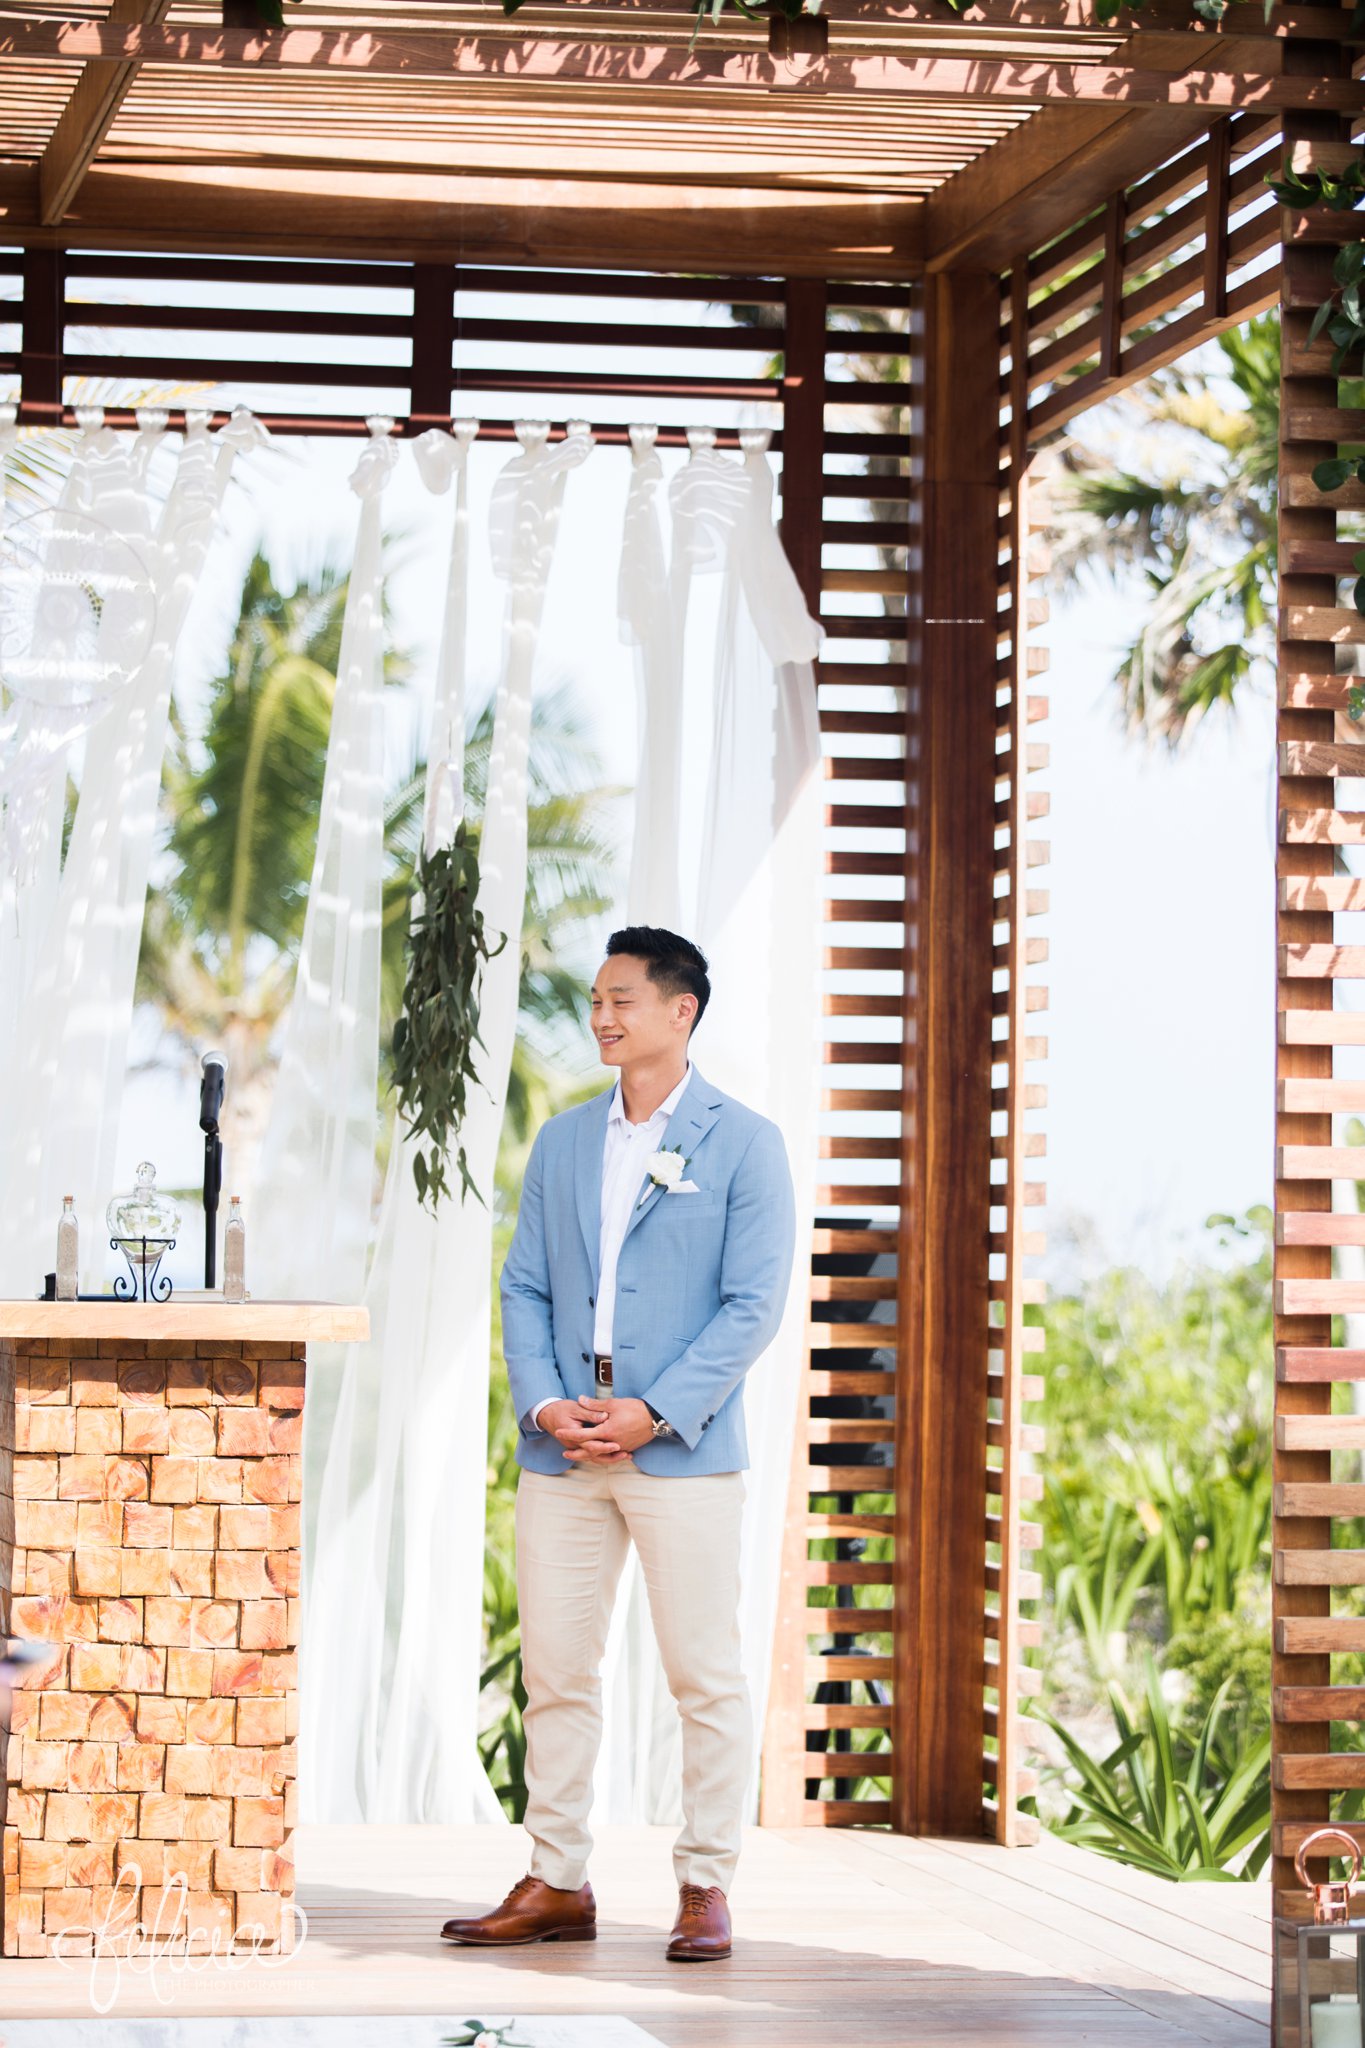 images by feliciathephotographer.com | Destination Beach Wedding | Unicco 20 87 | Photographer | L&S Travel | wood gazebo | ocean view | palm trees | groom | waiting for bride | ceremony | stone altar